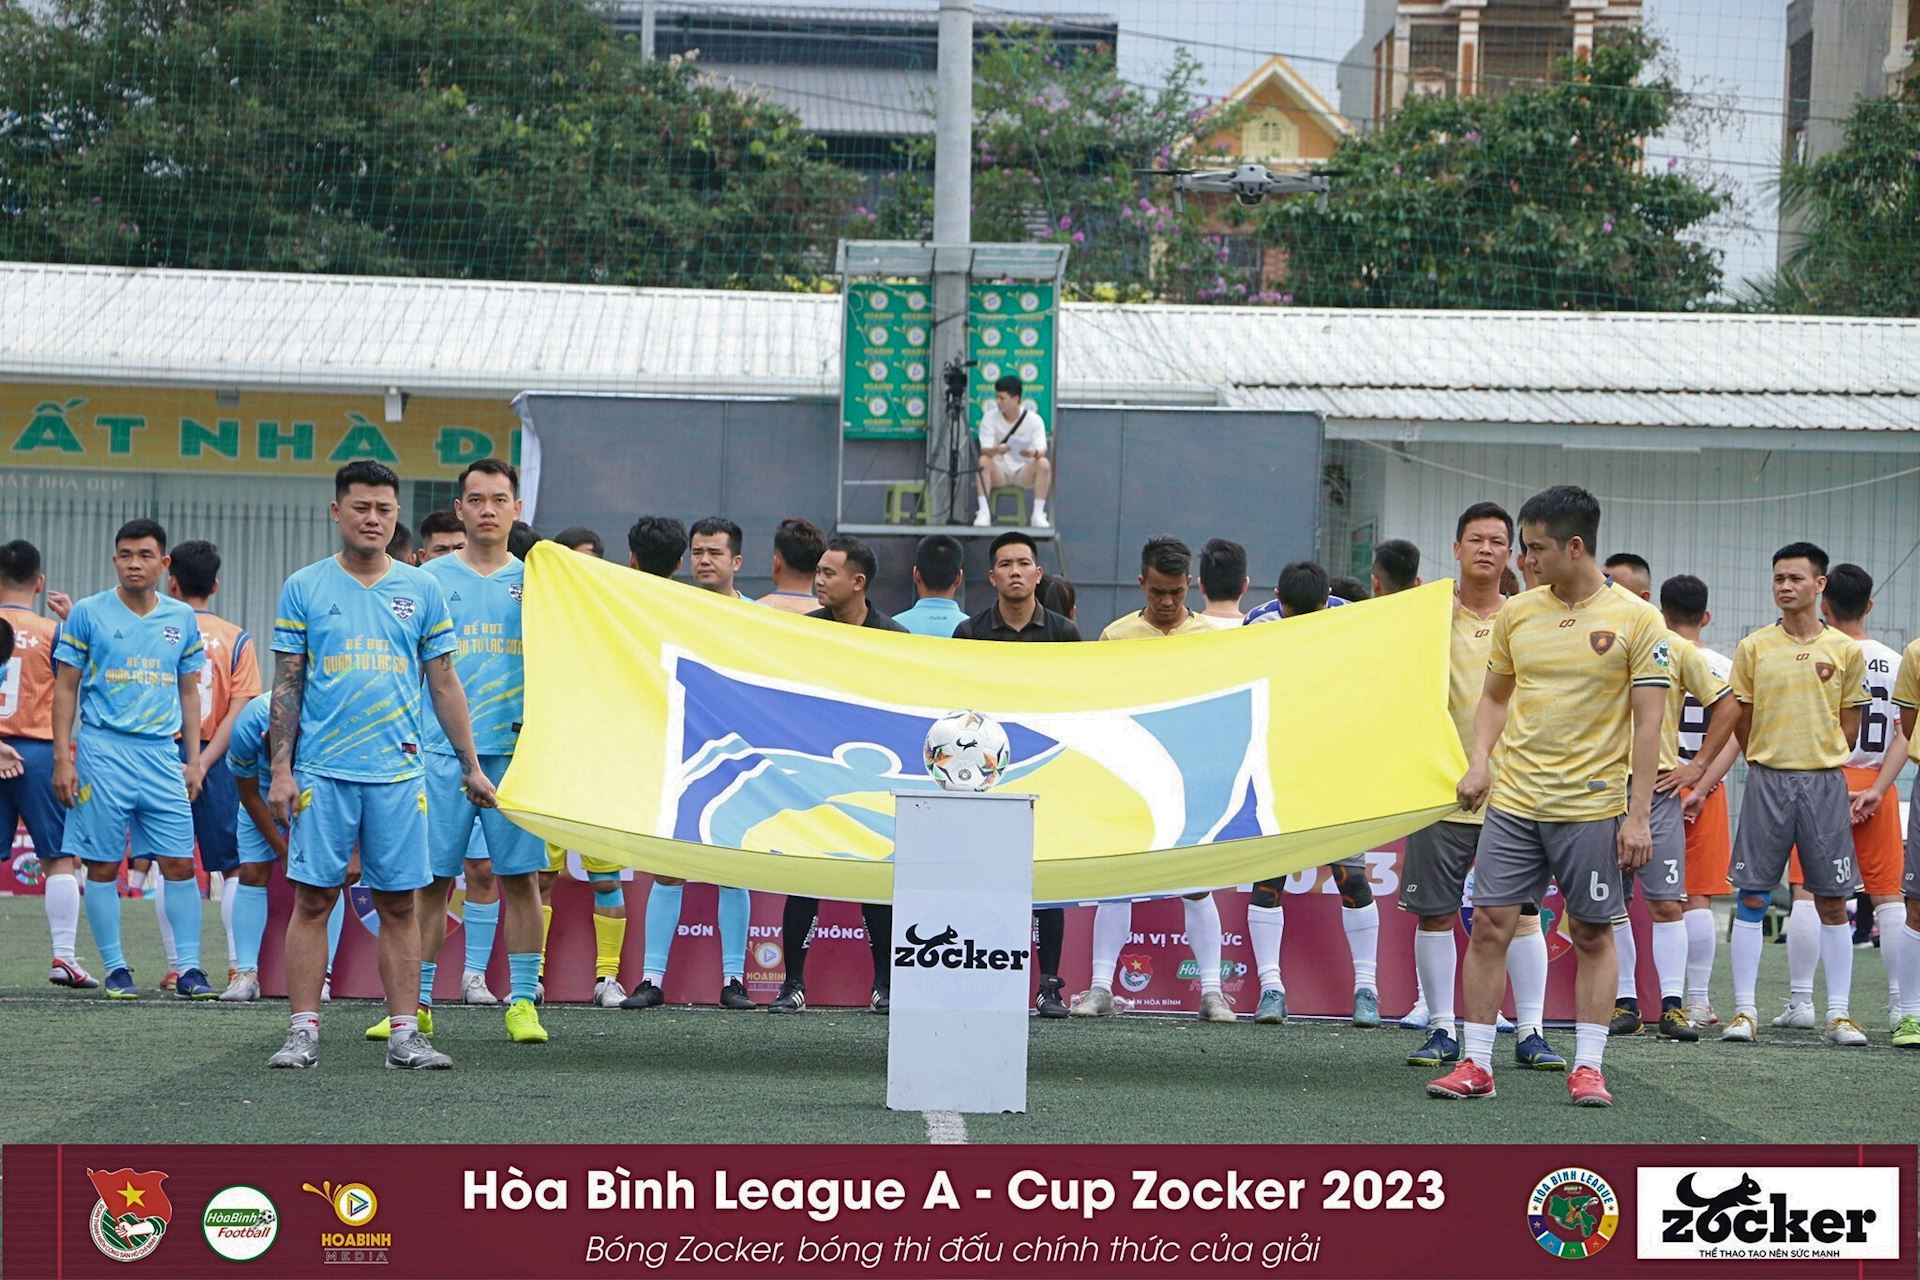 bong-zocker-Hoa-Bình-League-ZOCKER-CUP-2023-2